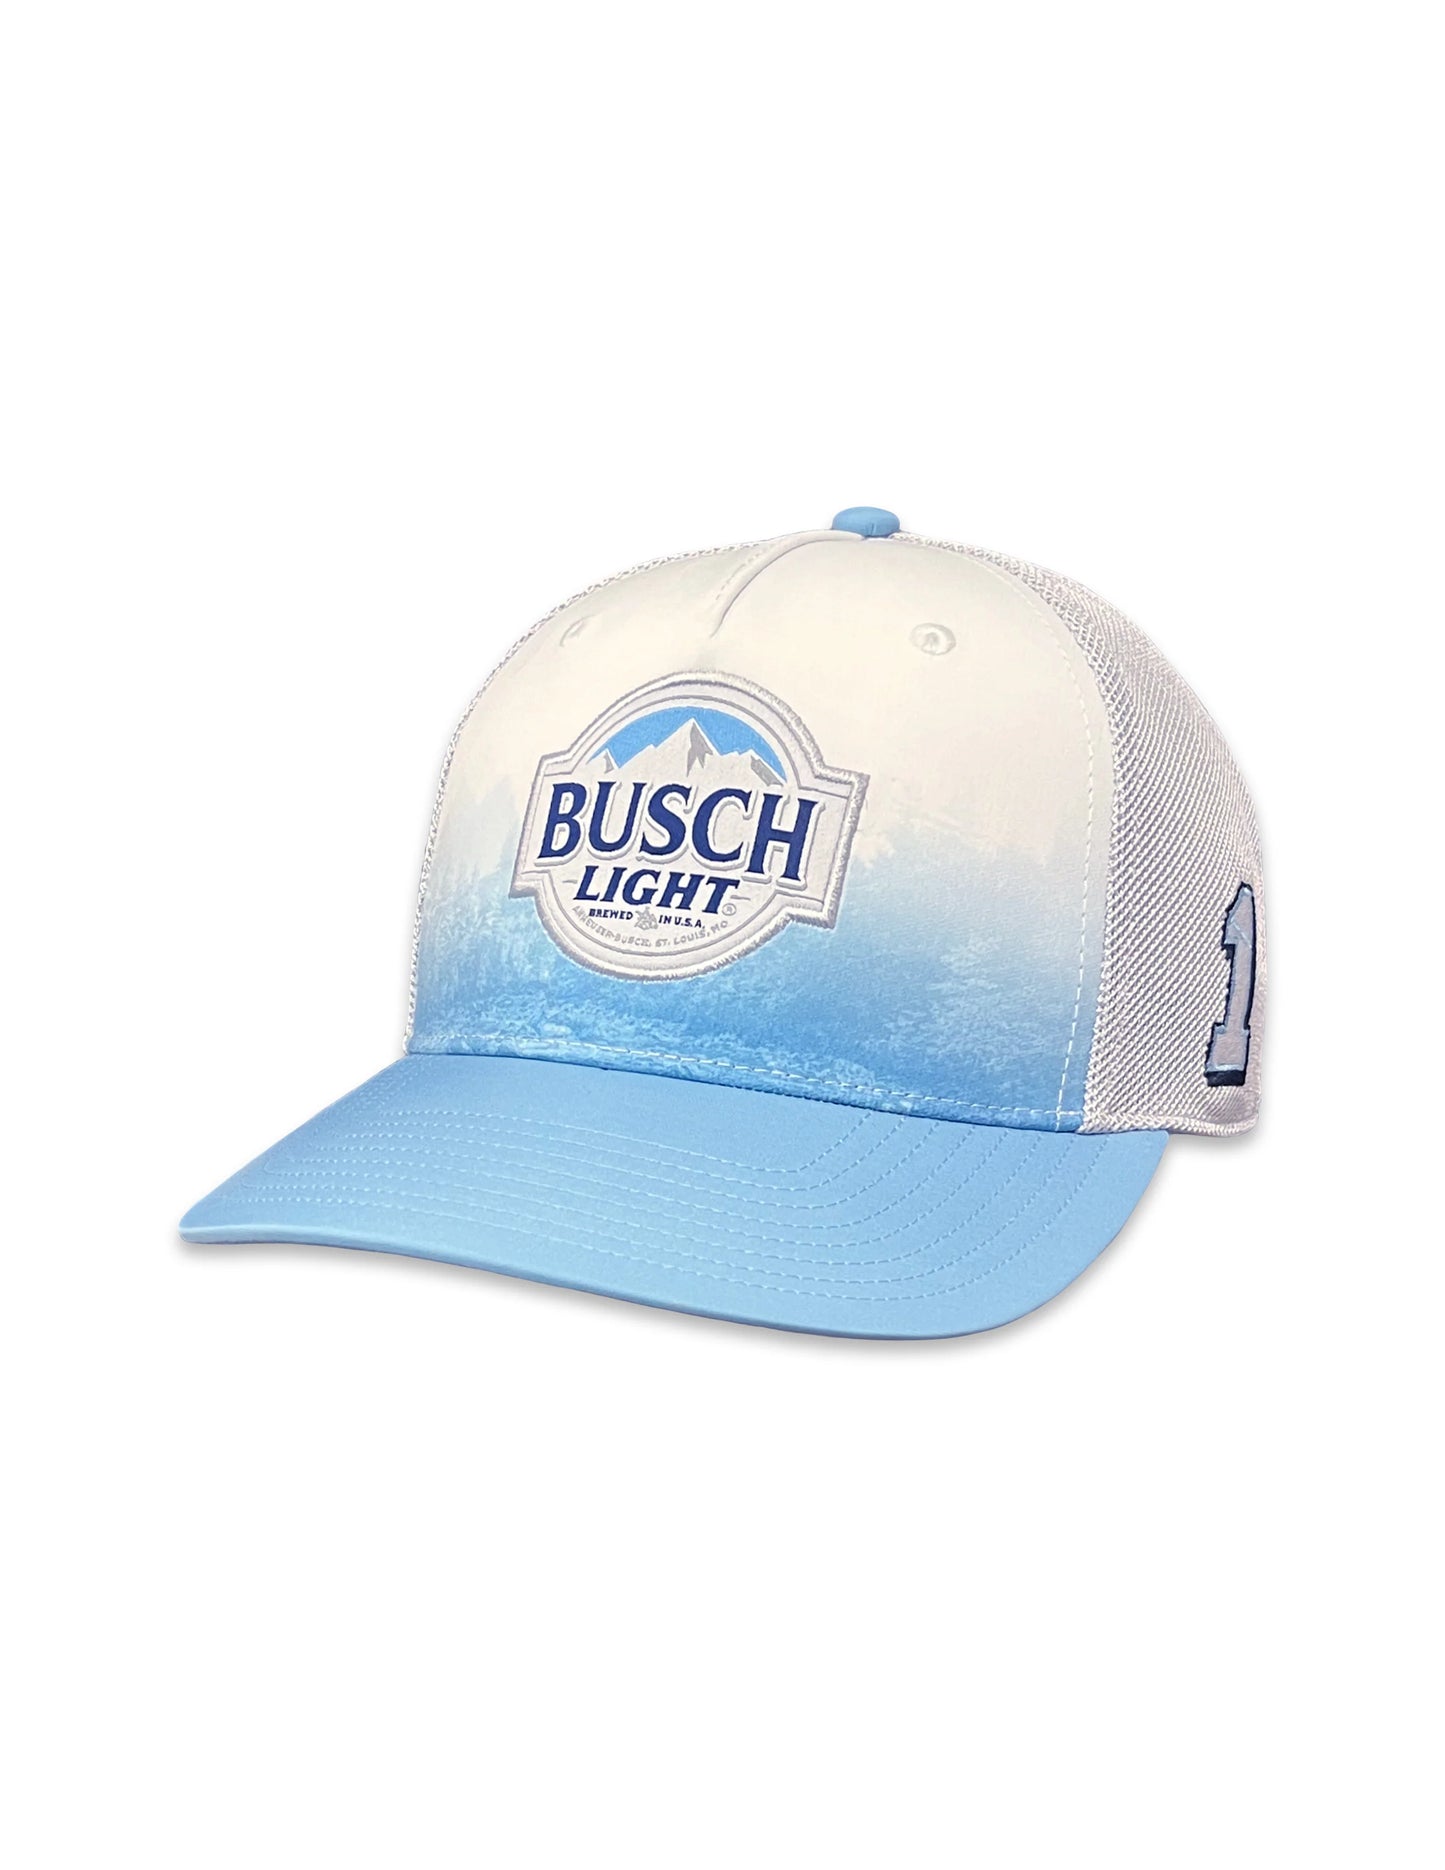 Ross Chastain Busch Light Mountains #1 Hat